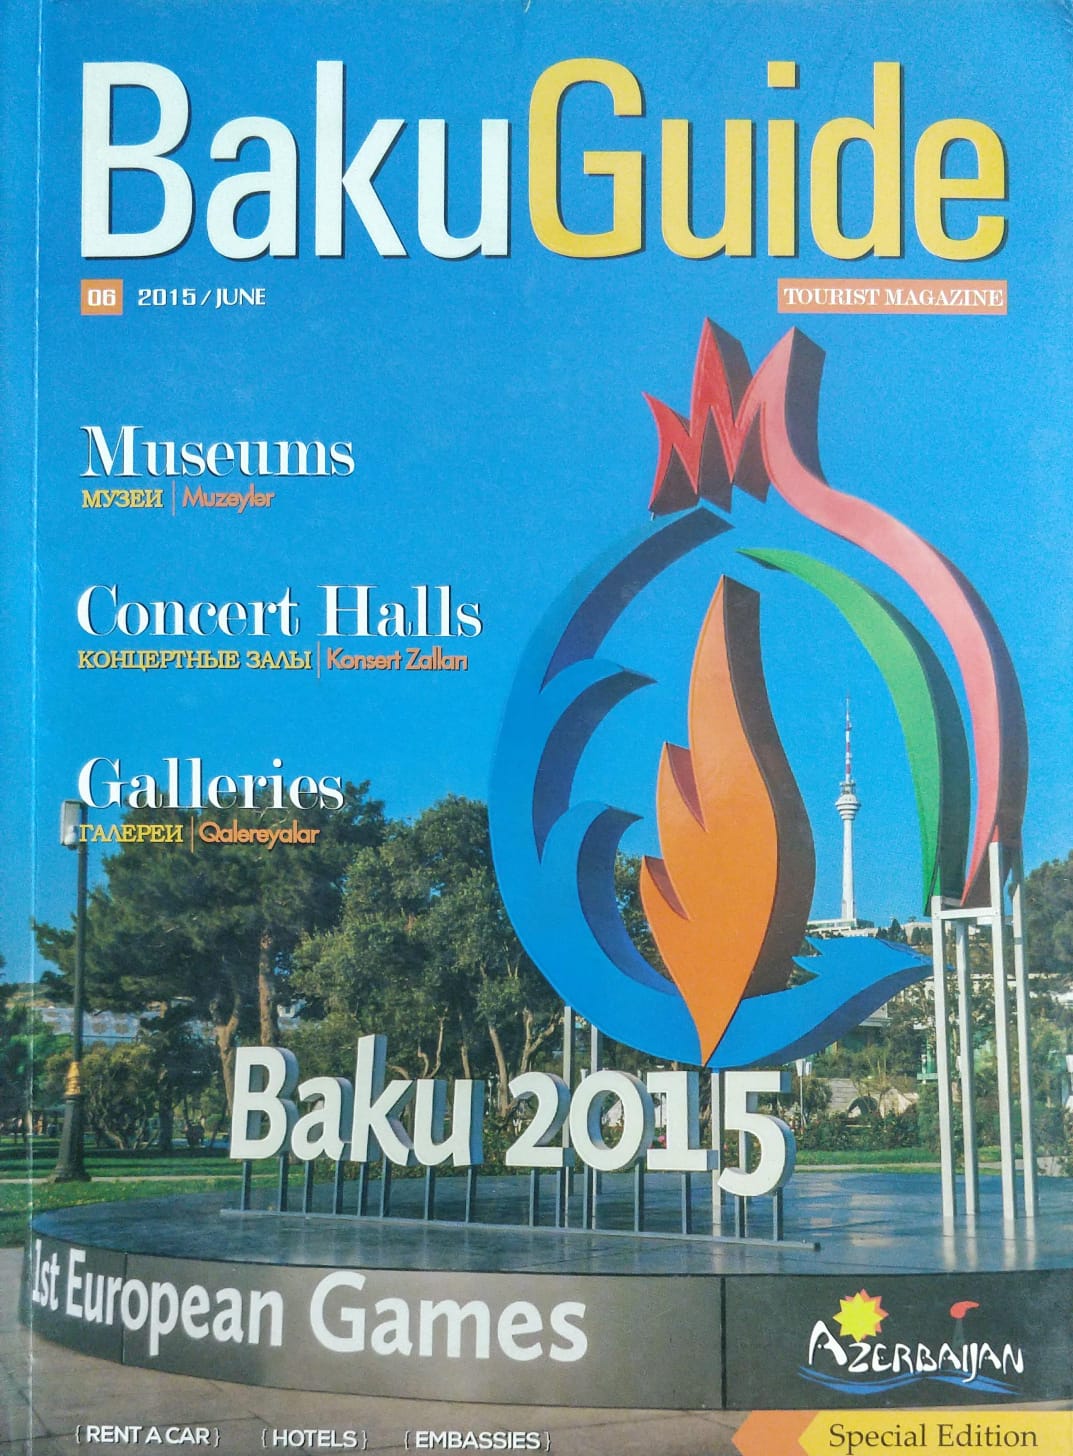 Baku Guide 2015